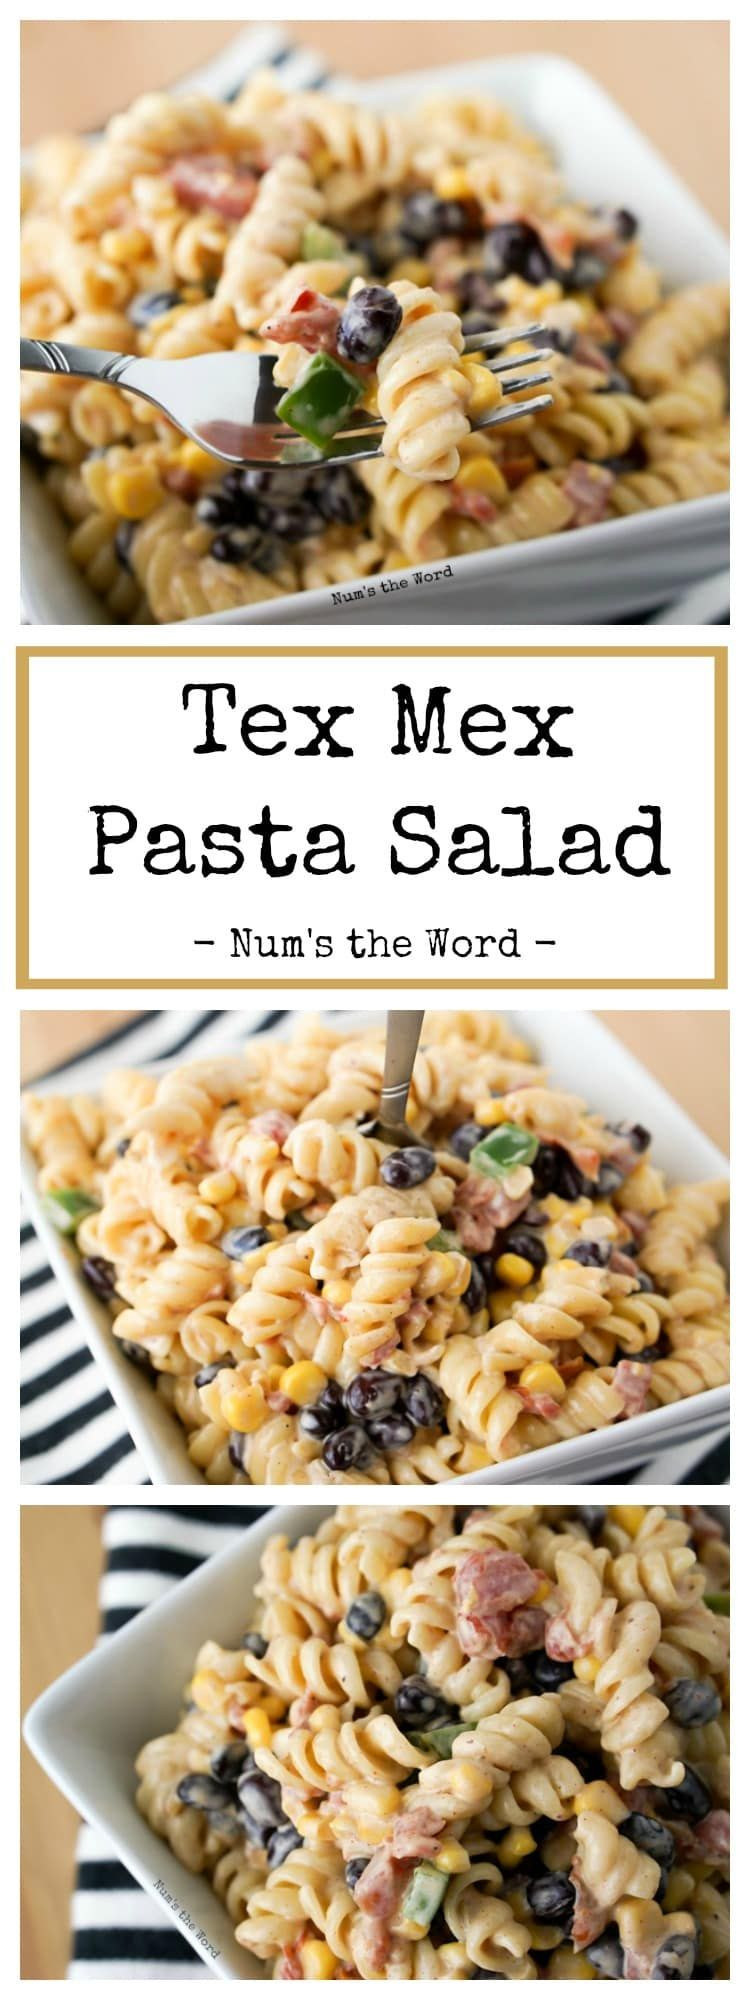 Best Potluck Main Dishes
 Tex Mex Pasta Salad